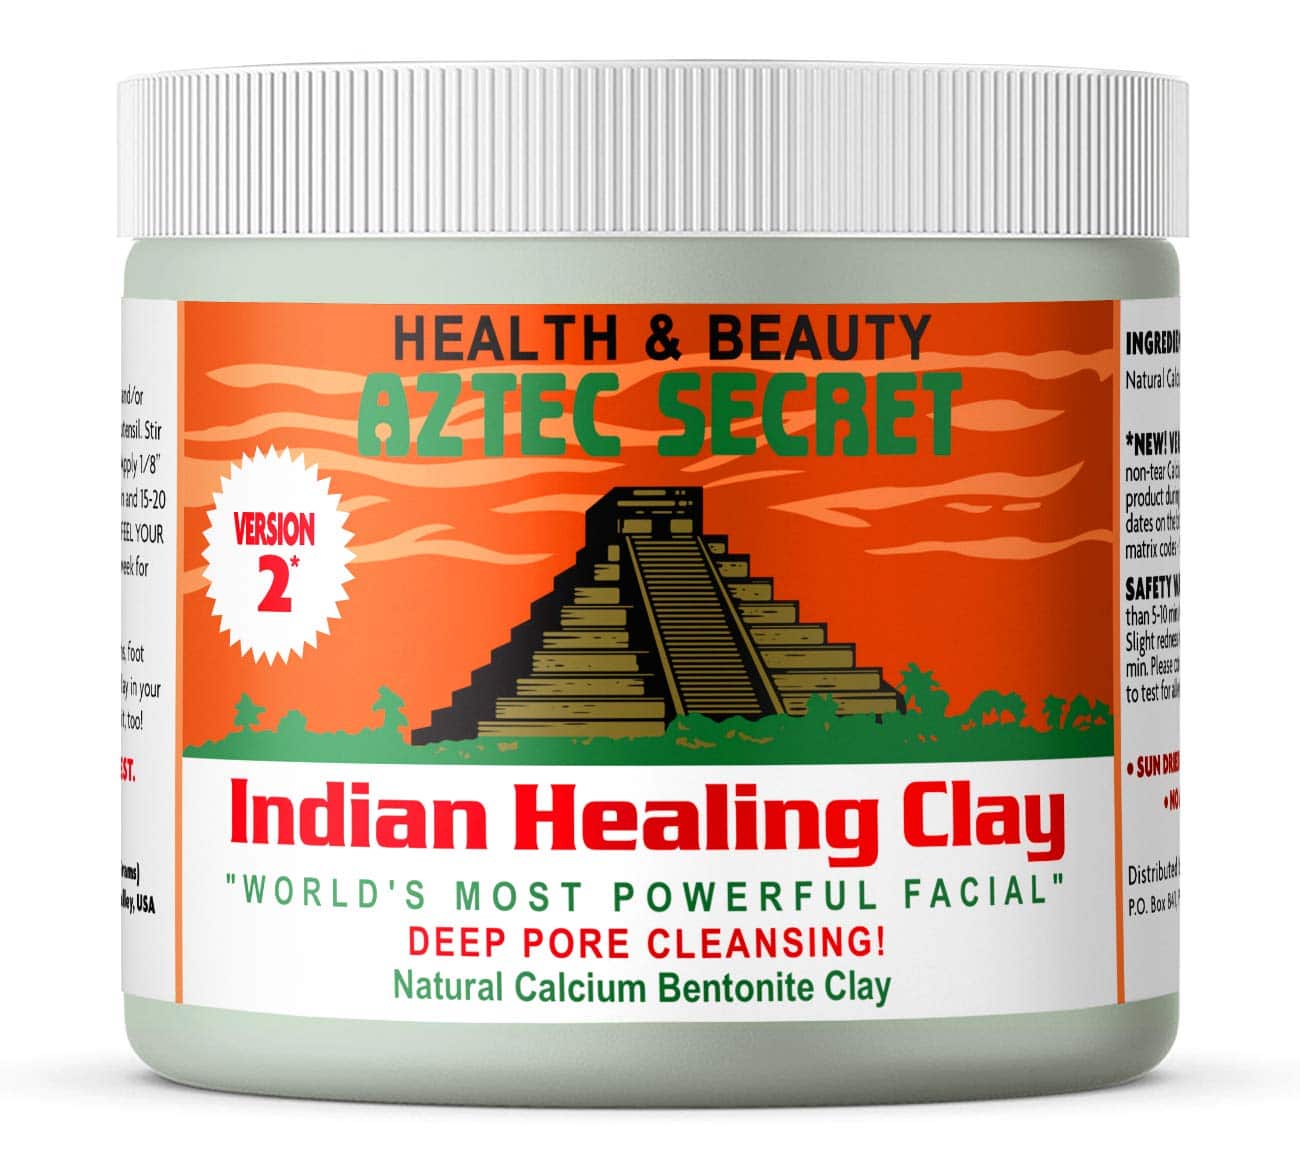 Aztec Secret Indian Healing Clay, Version 2